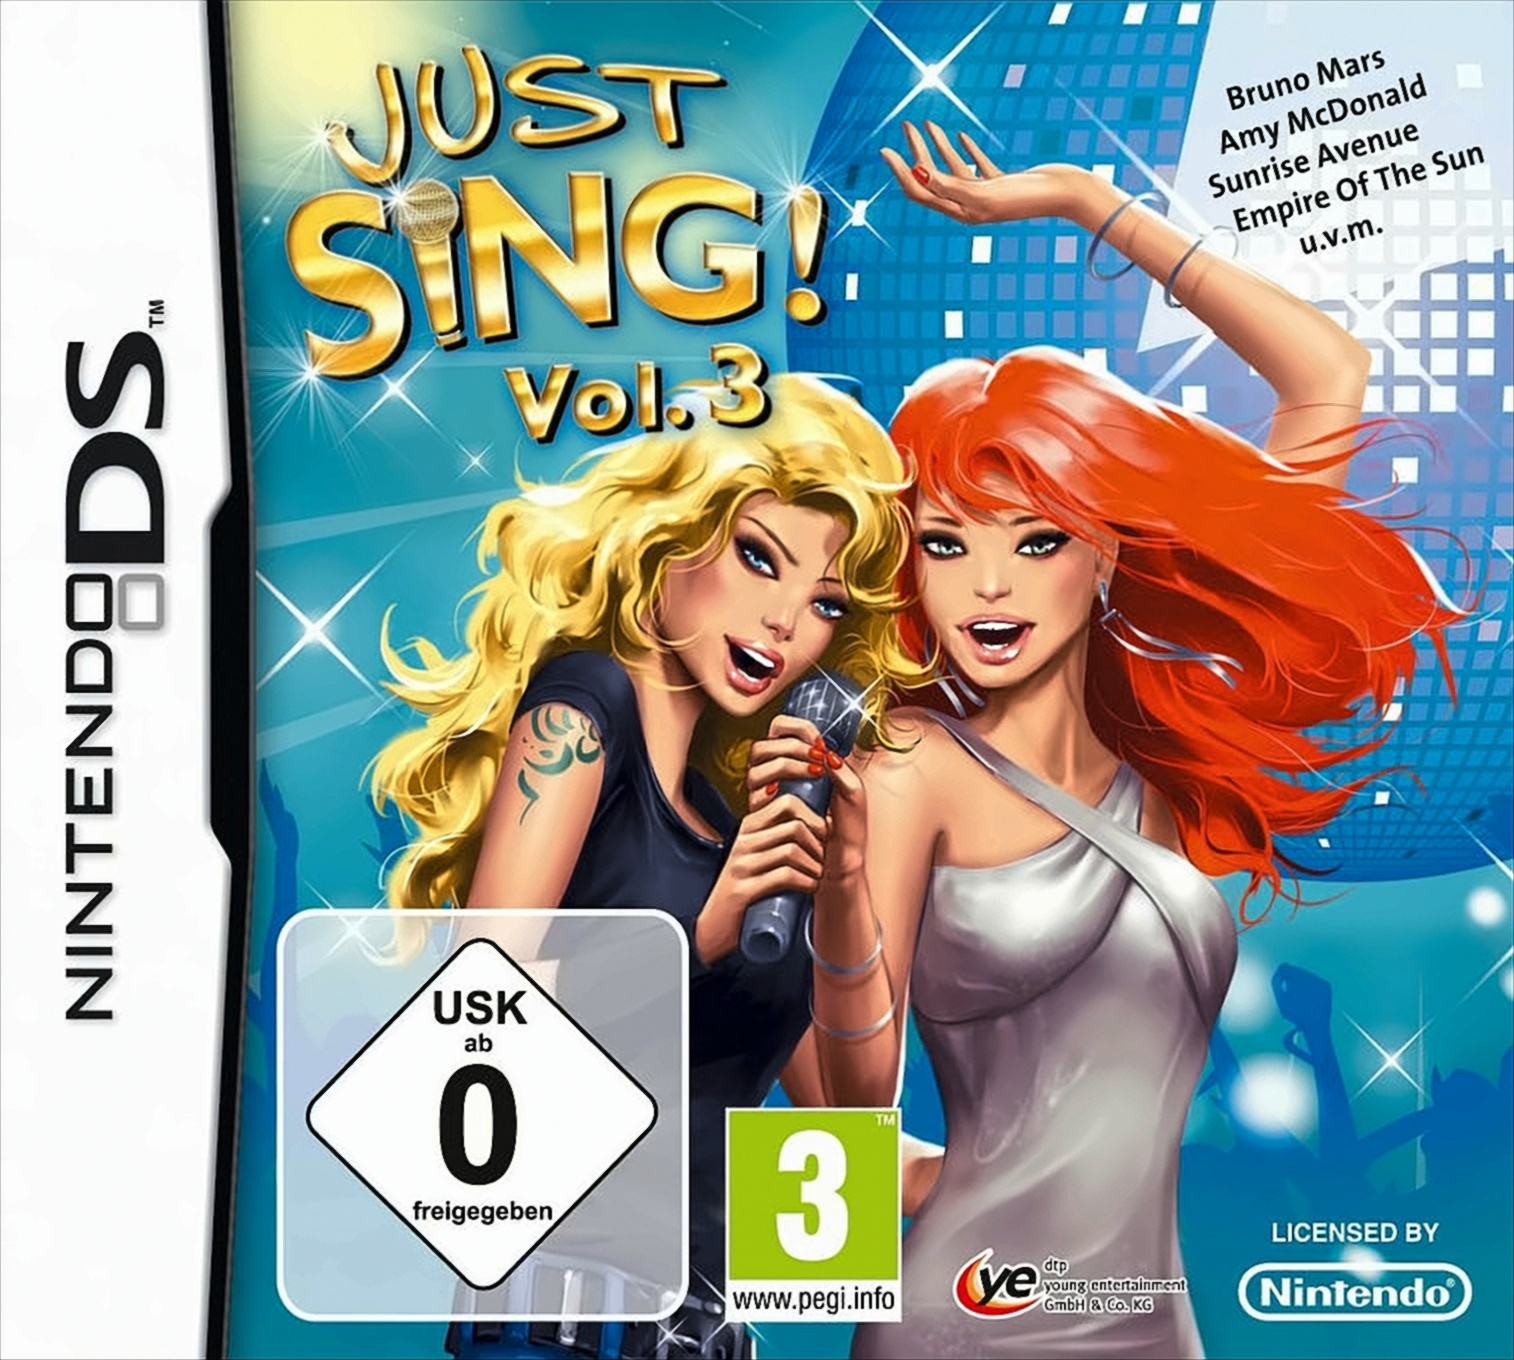 Just 3 - DS] Sing! [Nintendo Vol.